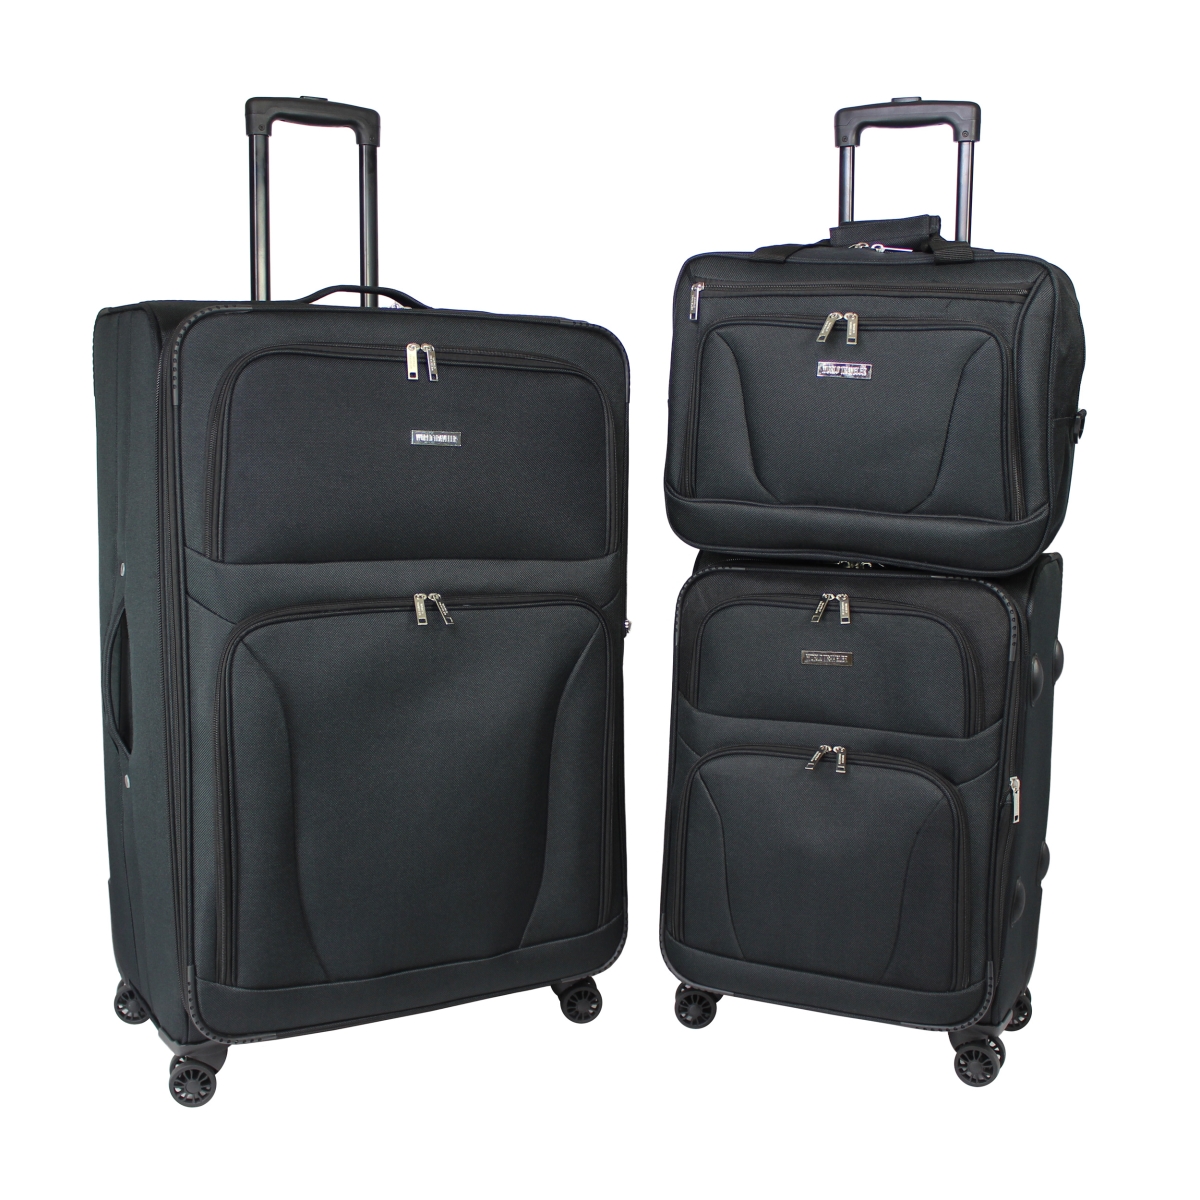 Wt100-black 3 Piece Embarque Collection Super Lightweight Spinner Luggage Set - Black